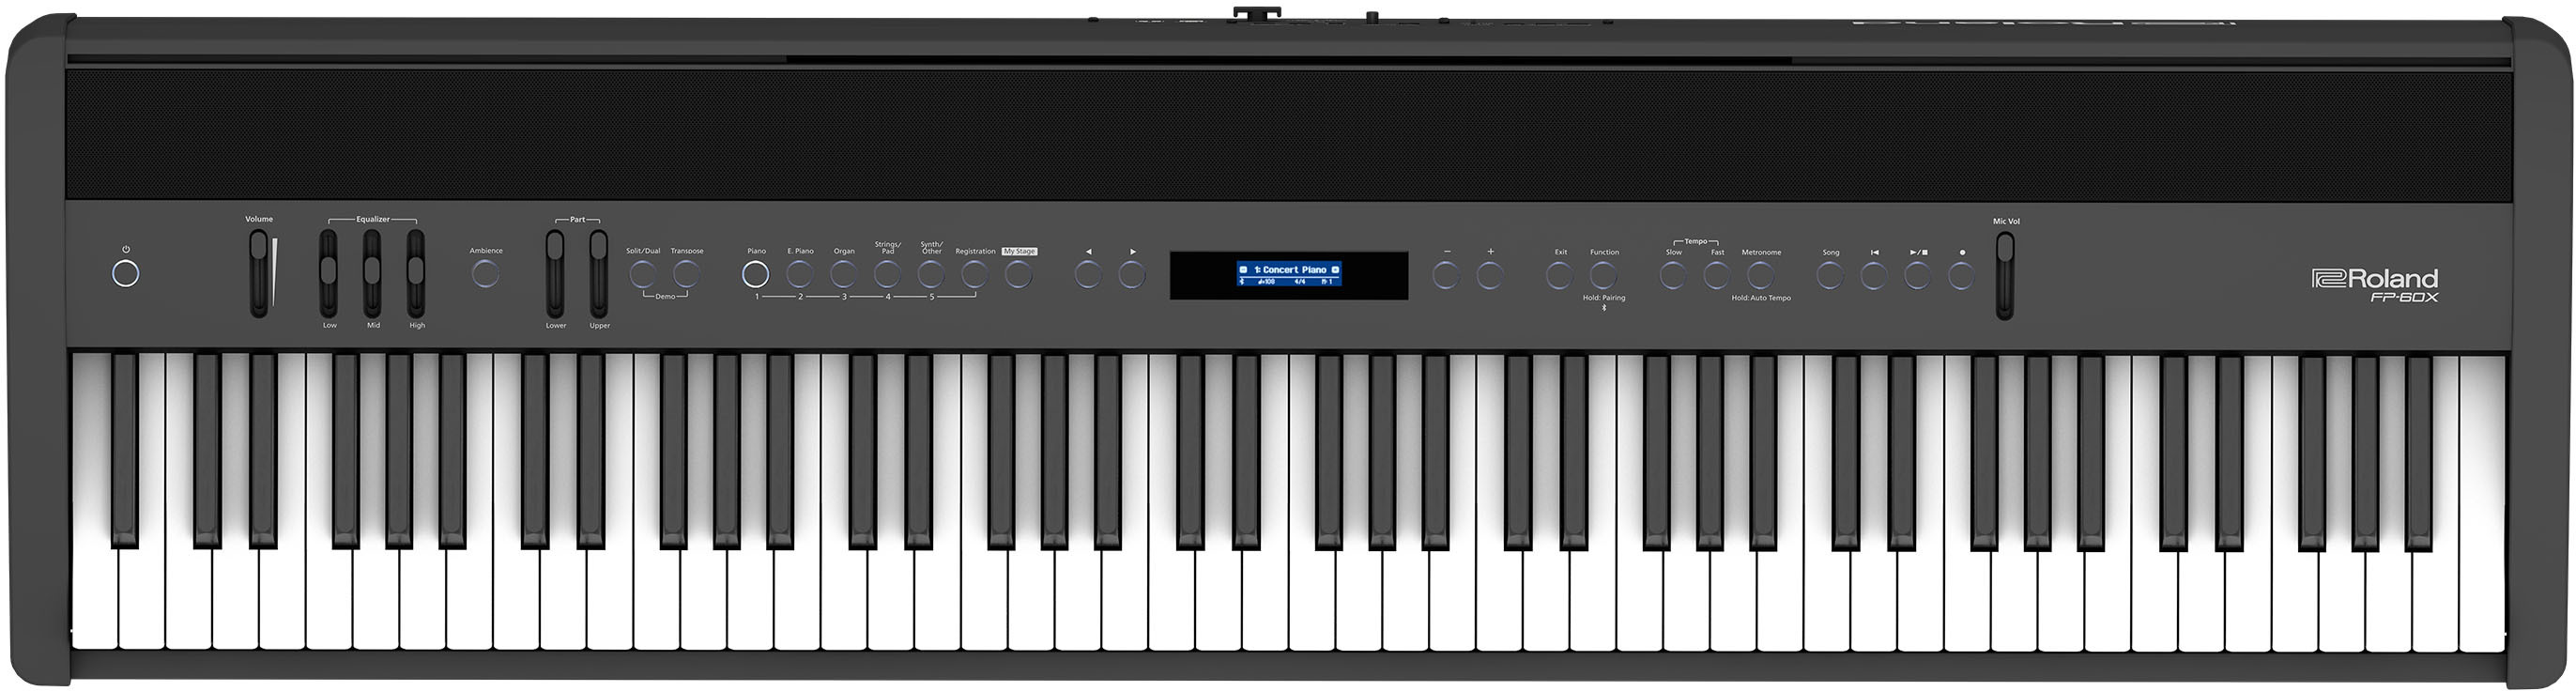 Roland Fp-60x Bk - Portable digital piano - Main picture